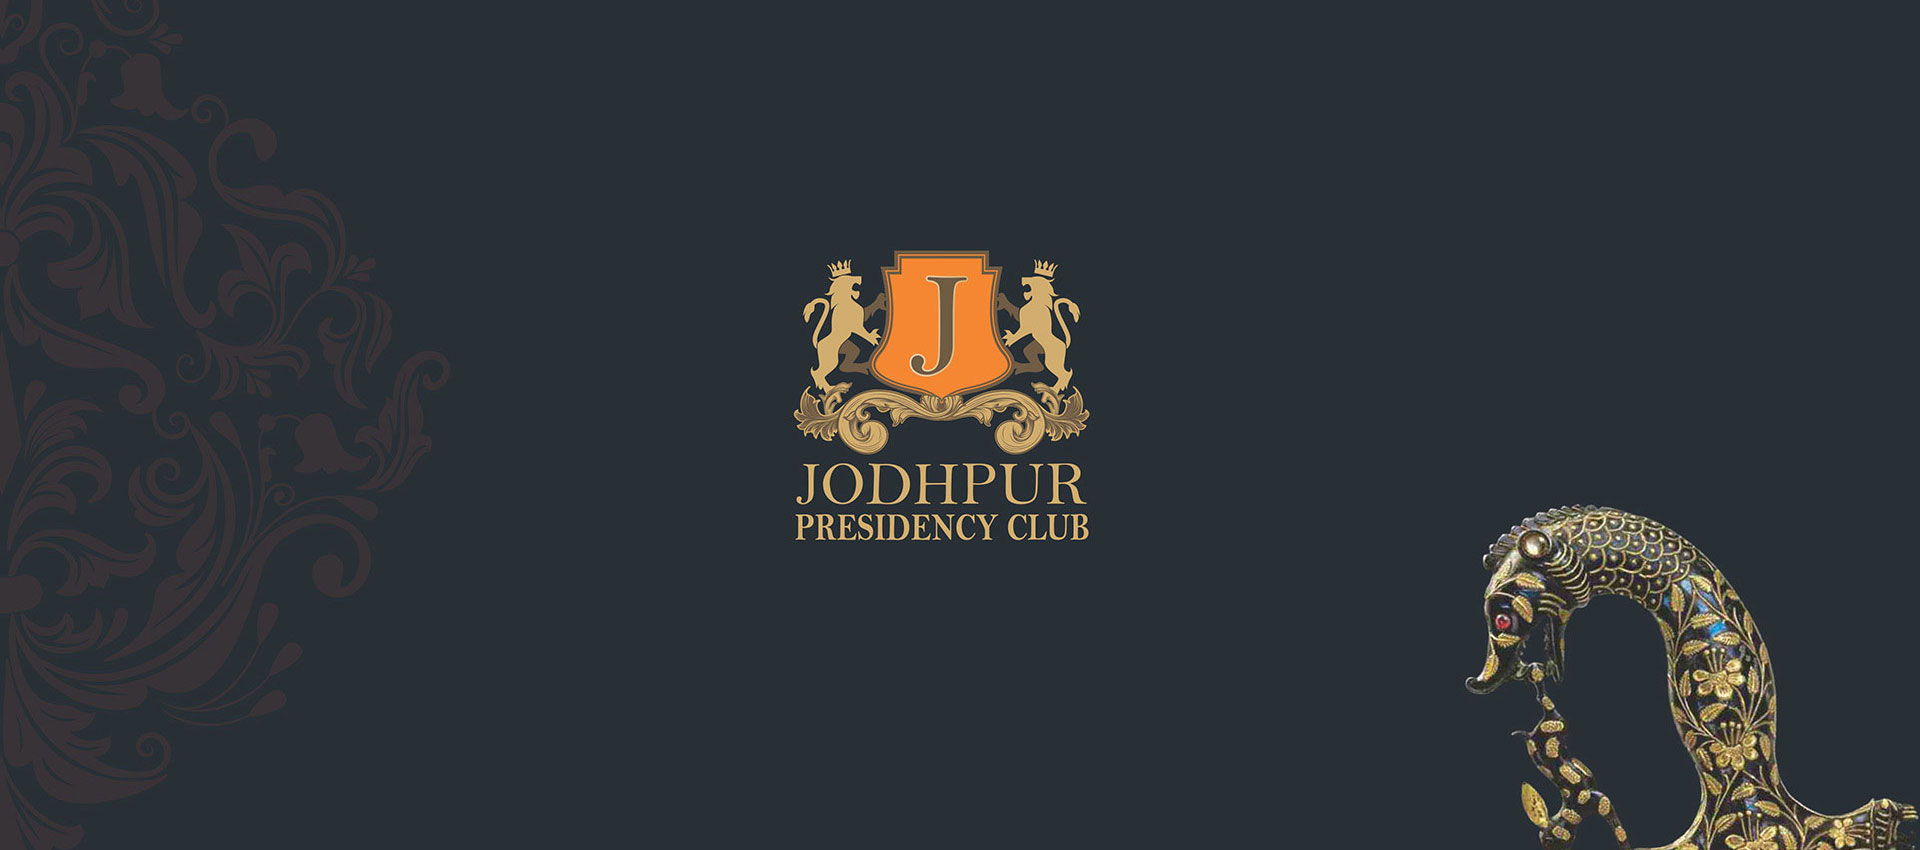 Jodhpur Presidency Club